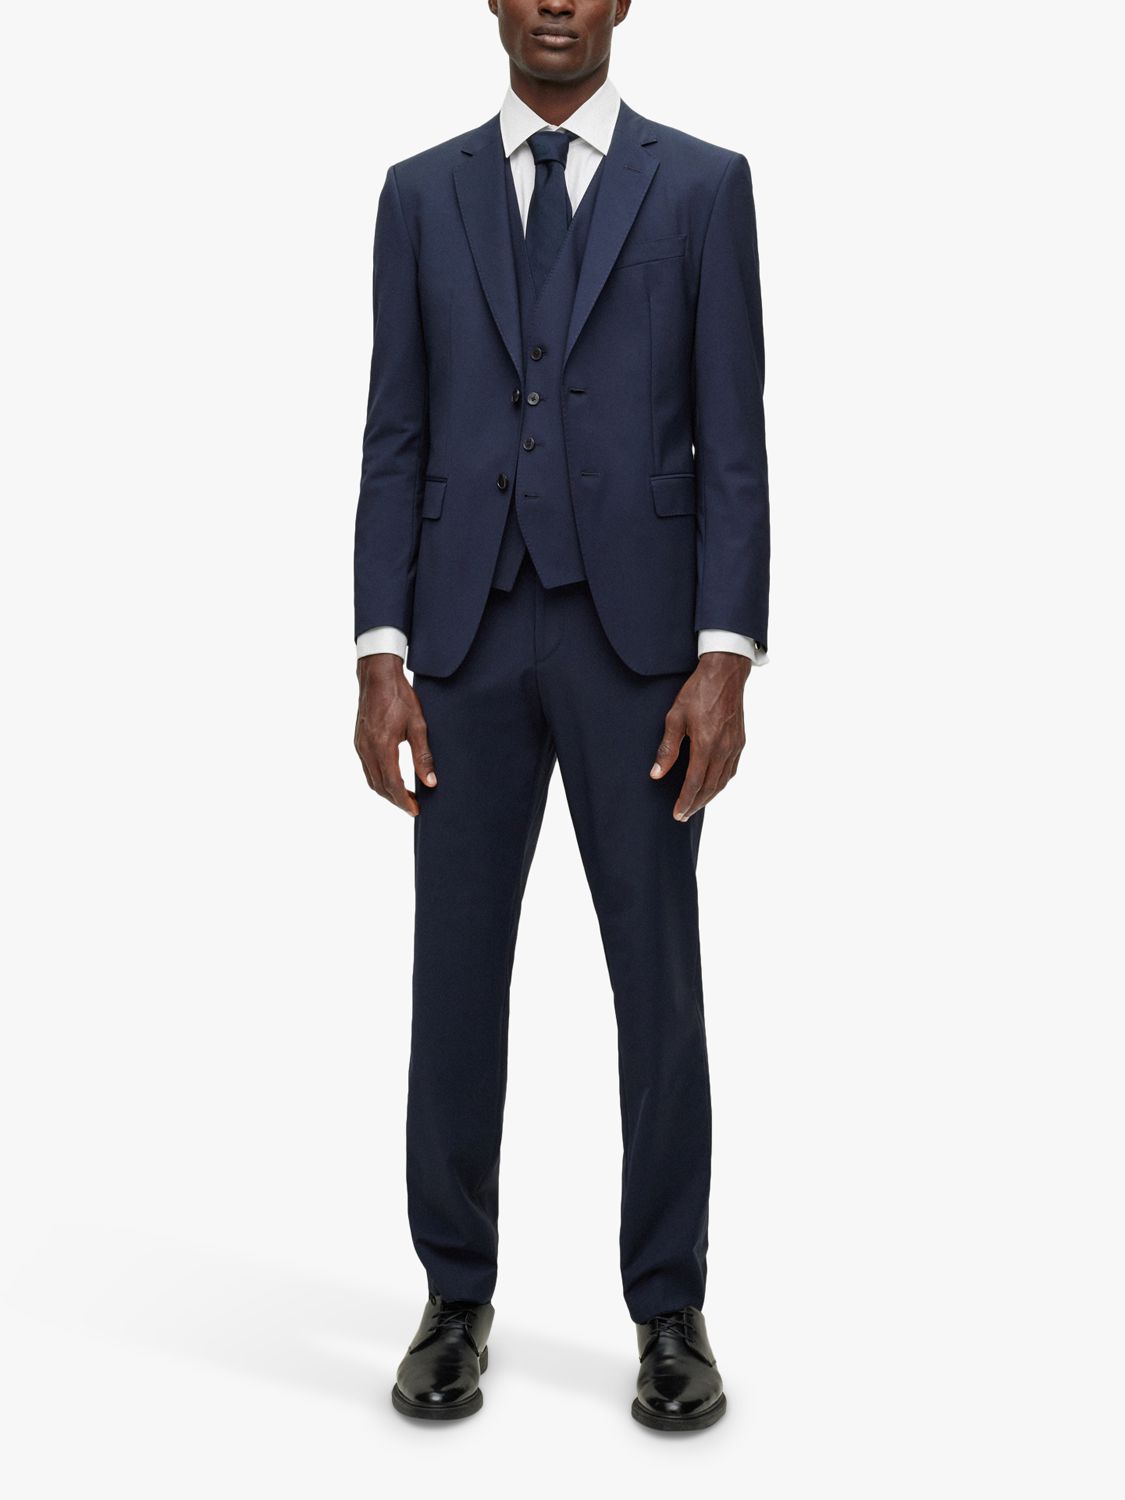 HUGO BOSS Leon Regular Fit Wool Blend Suit Trousers, Dark Blue, 30R